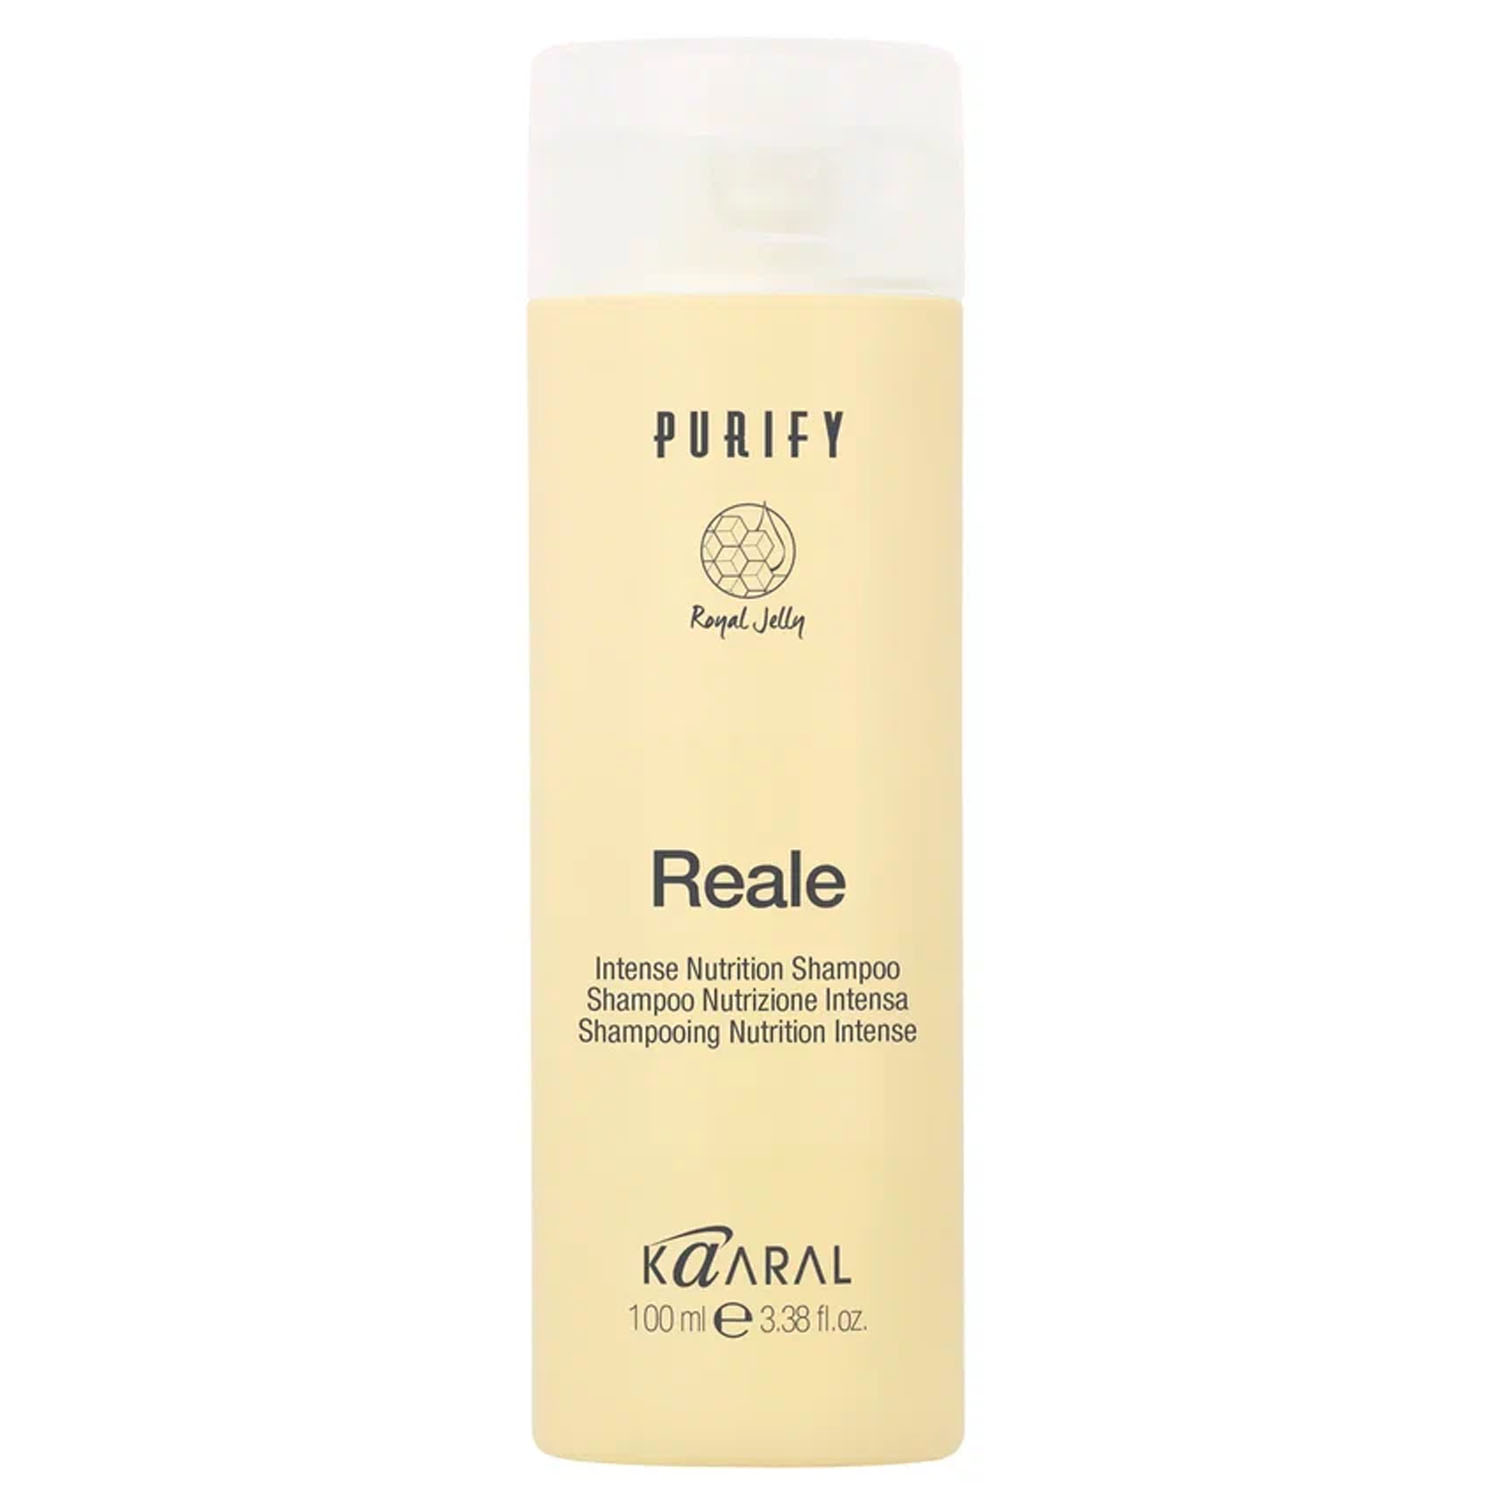 Kaaral Восстанавливающий шампунь для поврежденных волос Reale Intense Nutrition Shampoo, 100 мл (Kaaral, Purify) цена и фото